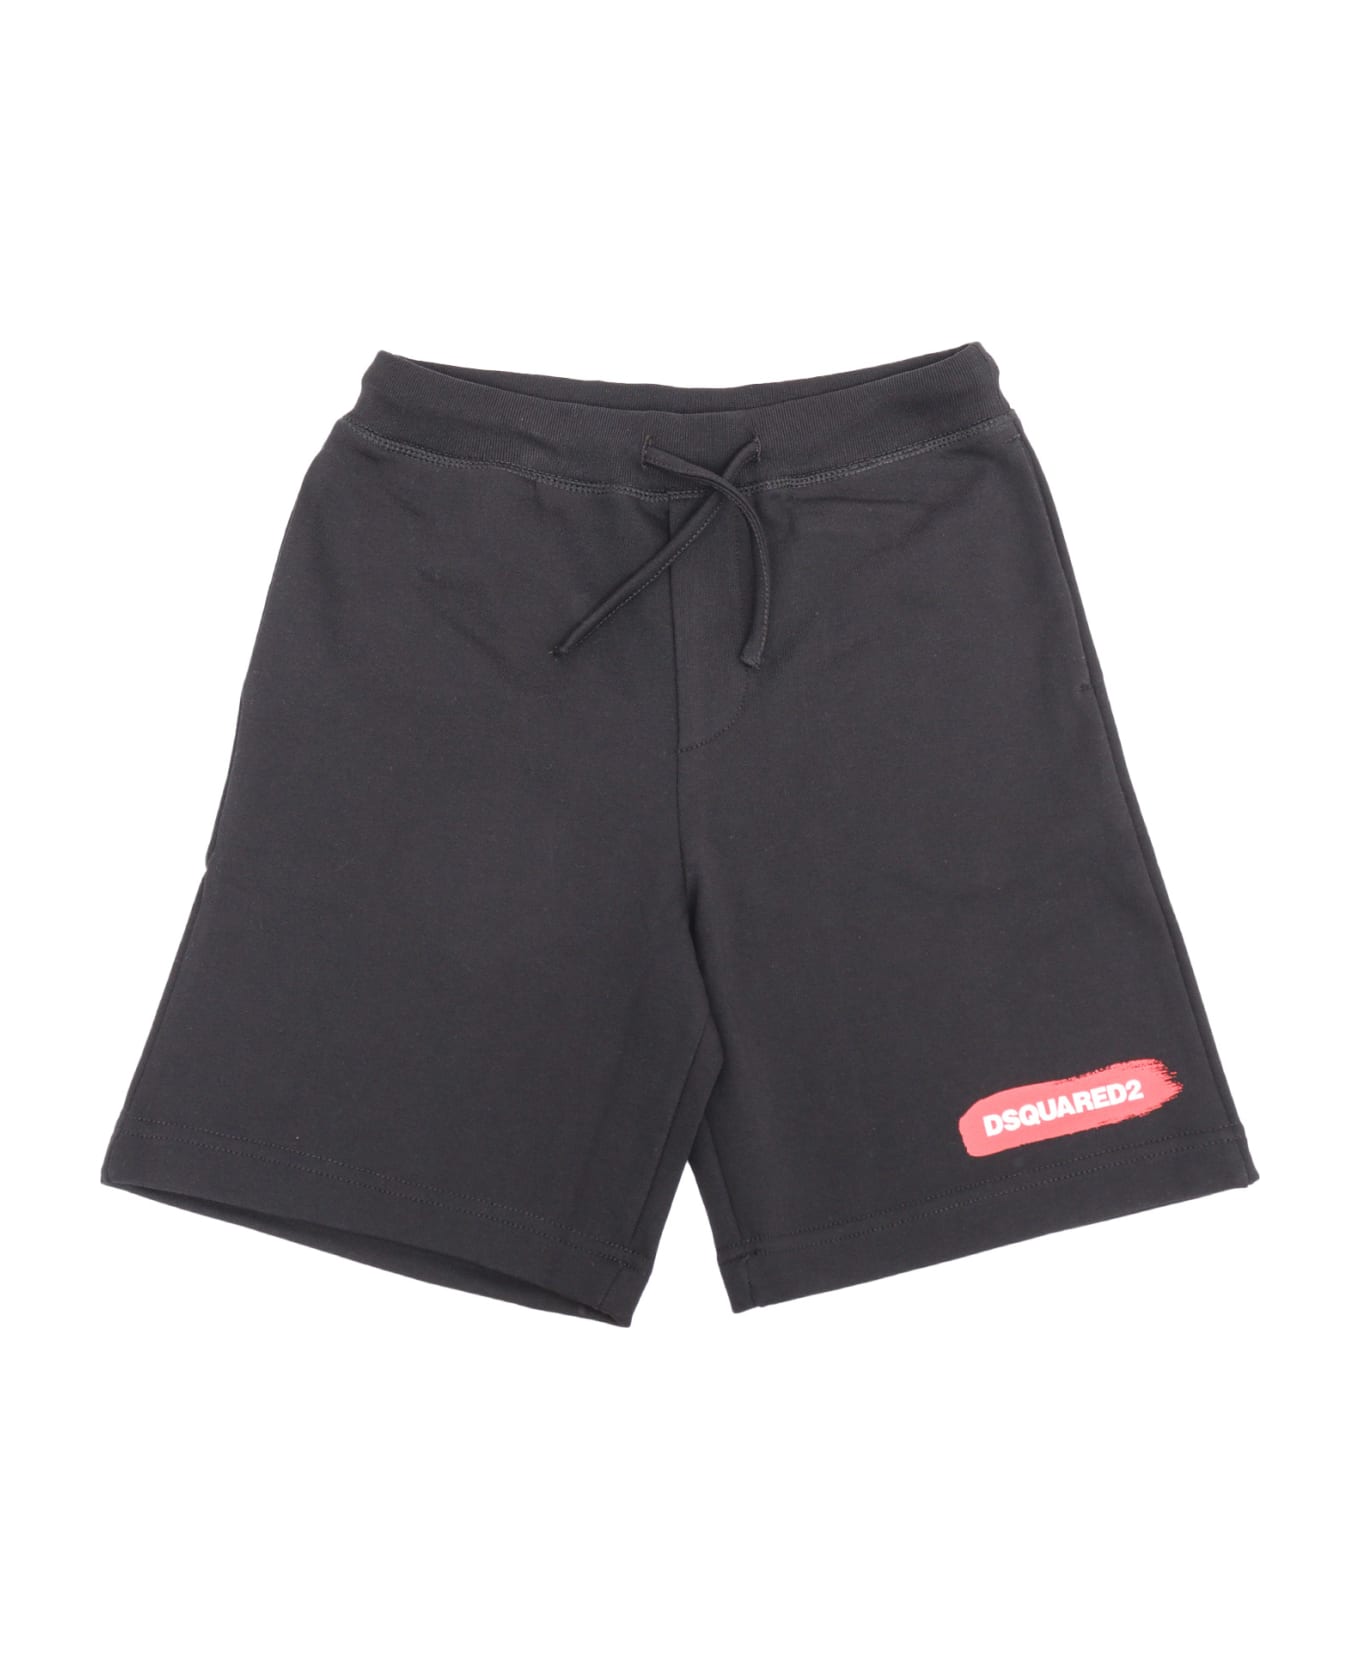 Dsquared2 D-squared2 Sports Shorts - BLACK ボトムス